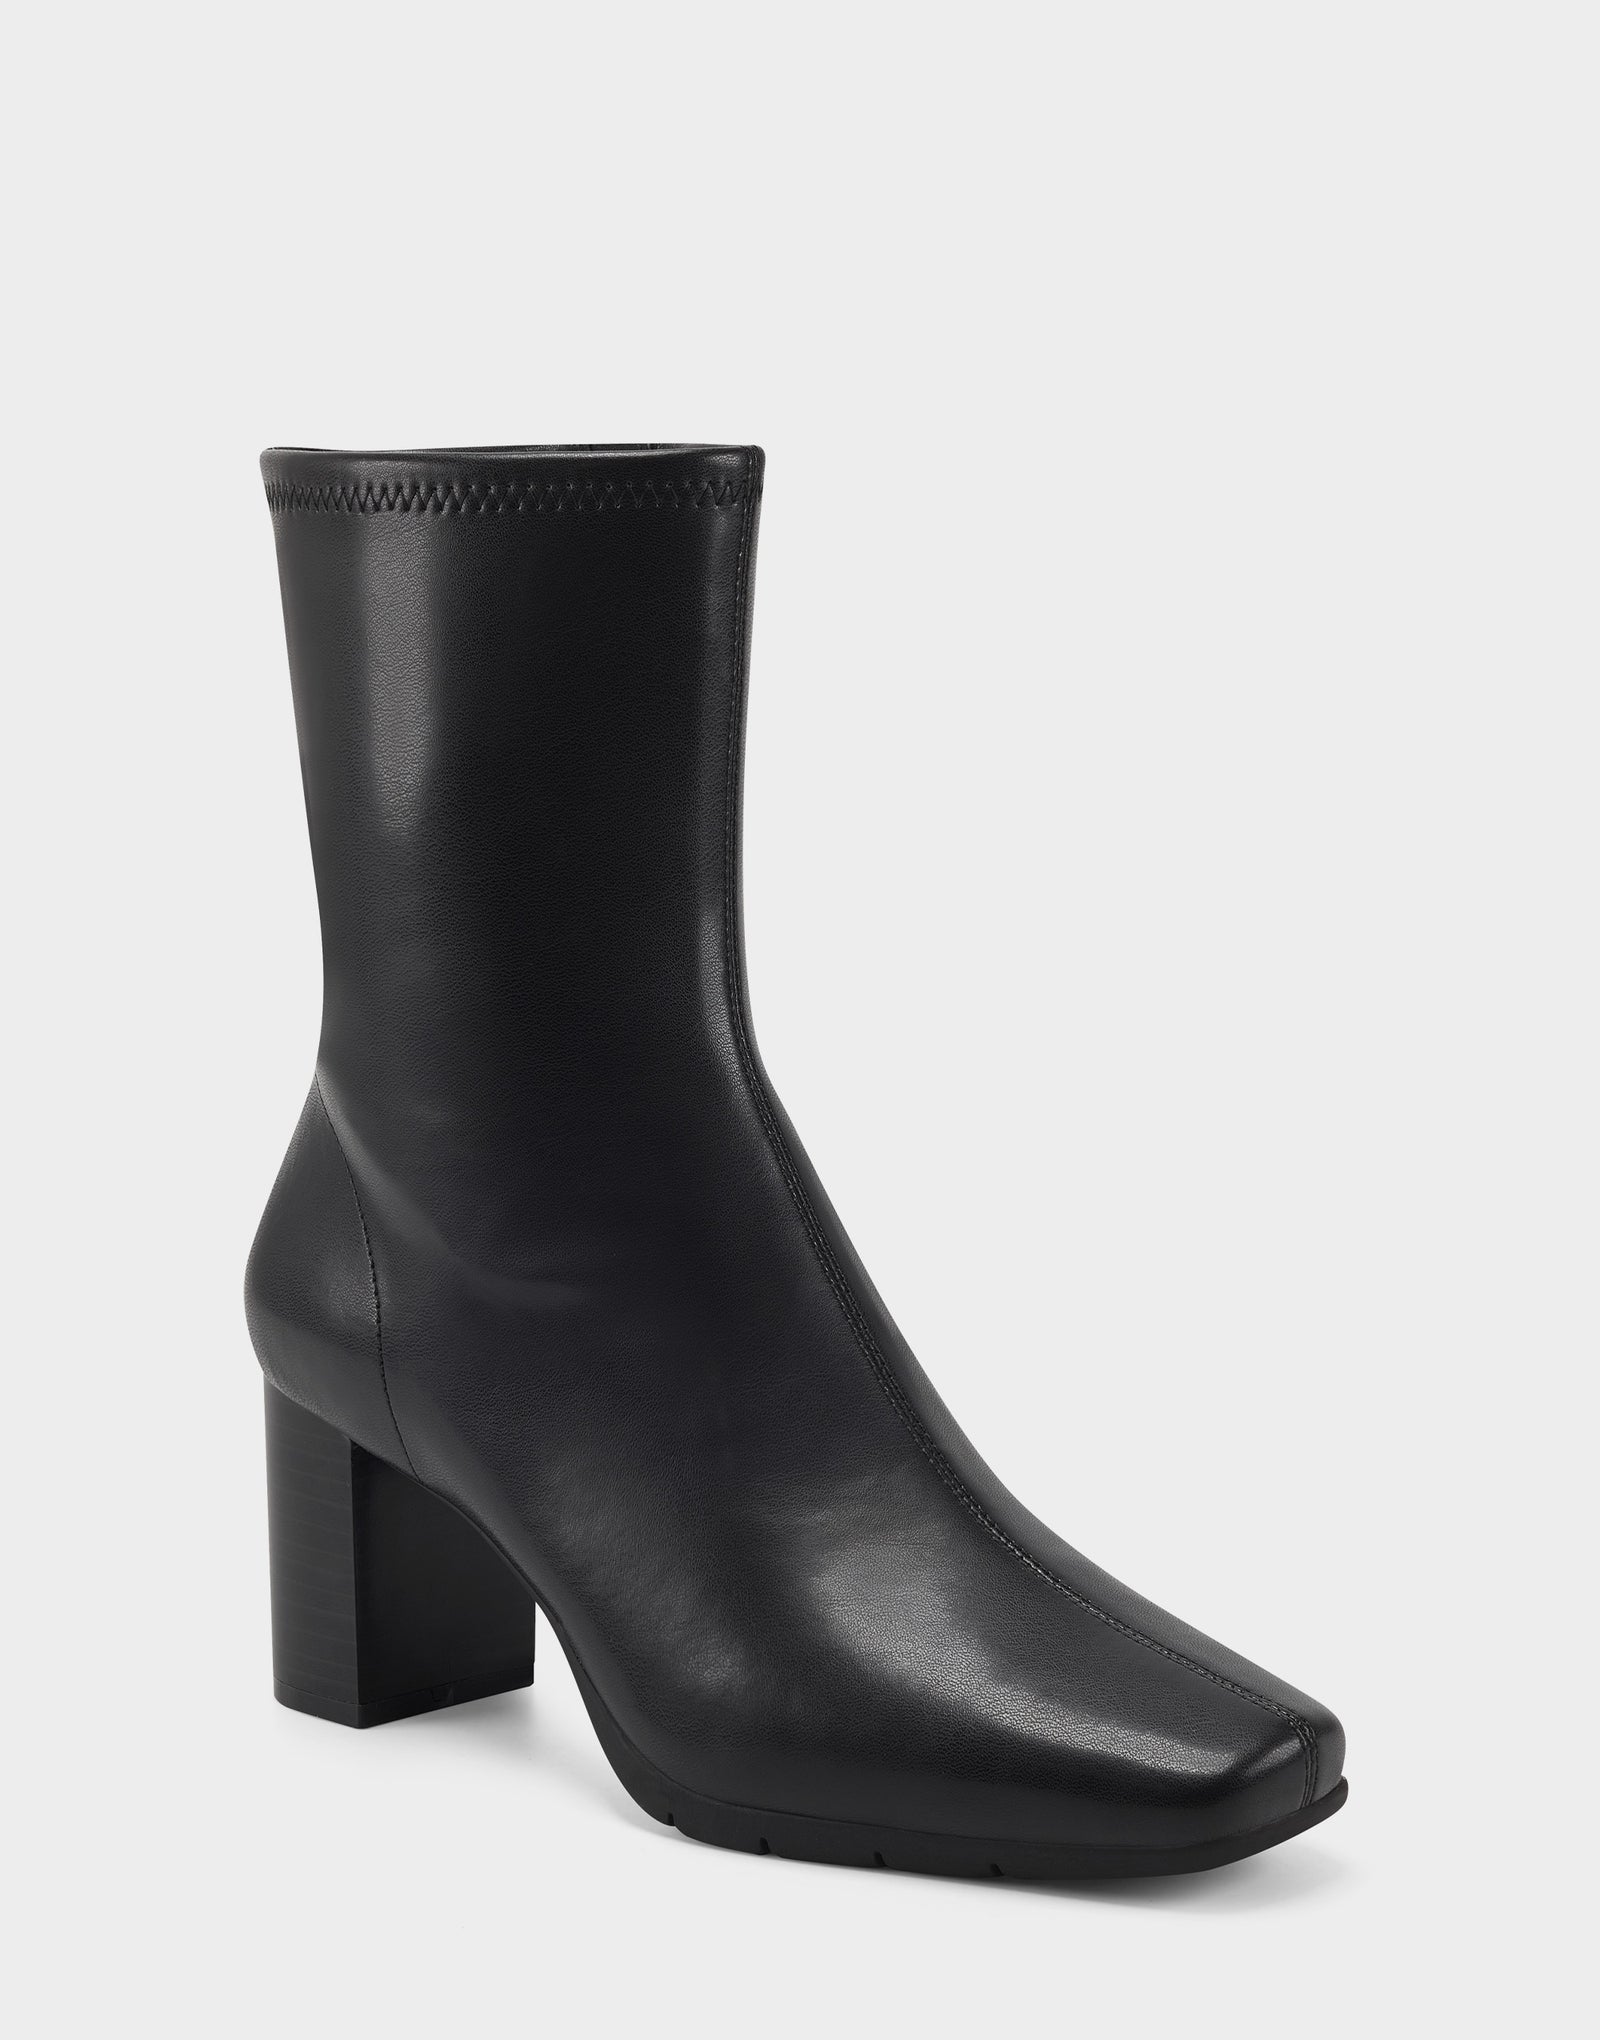 Women's Ankle Boot in Black